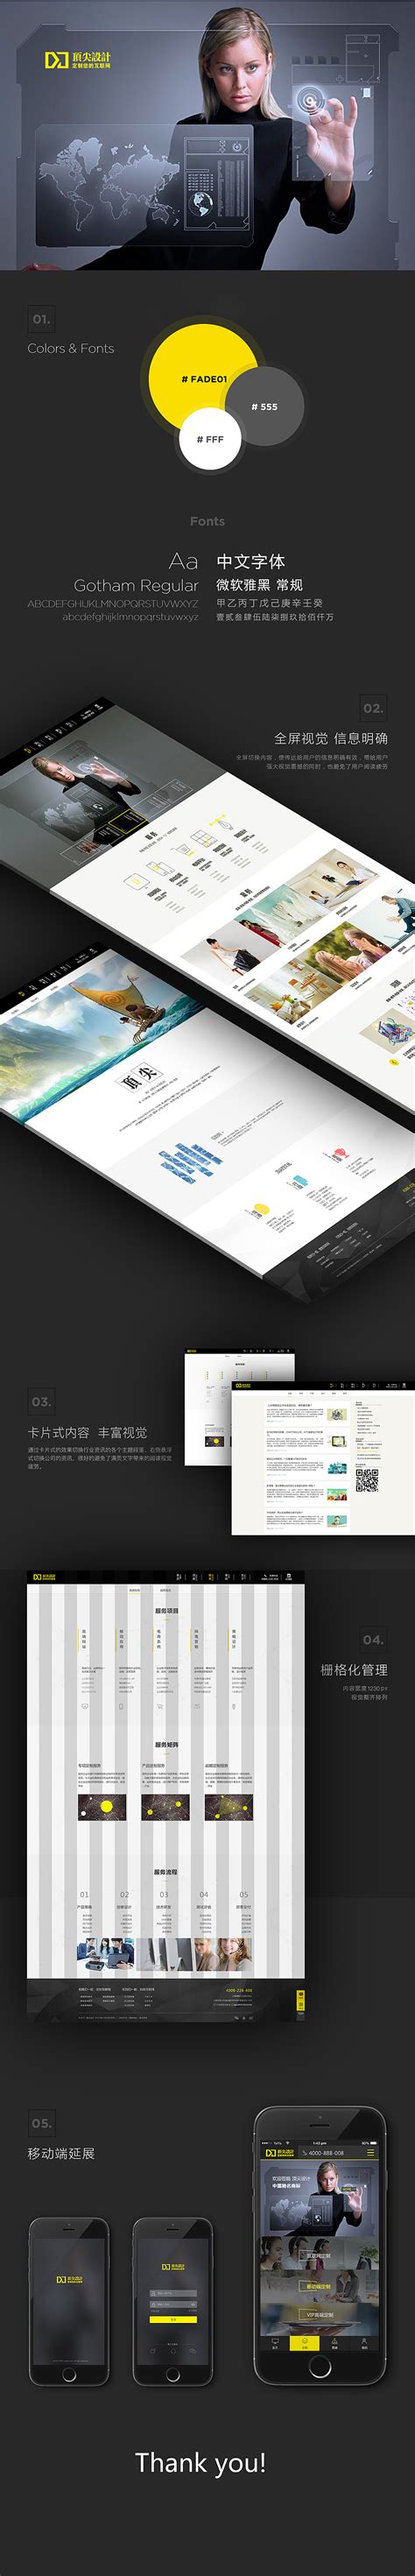 Behance官网最受欢迎UI设计师 十大顶尖设计作品赏析